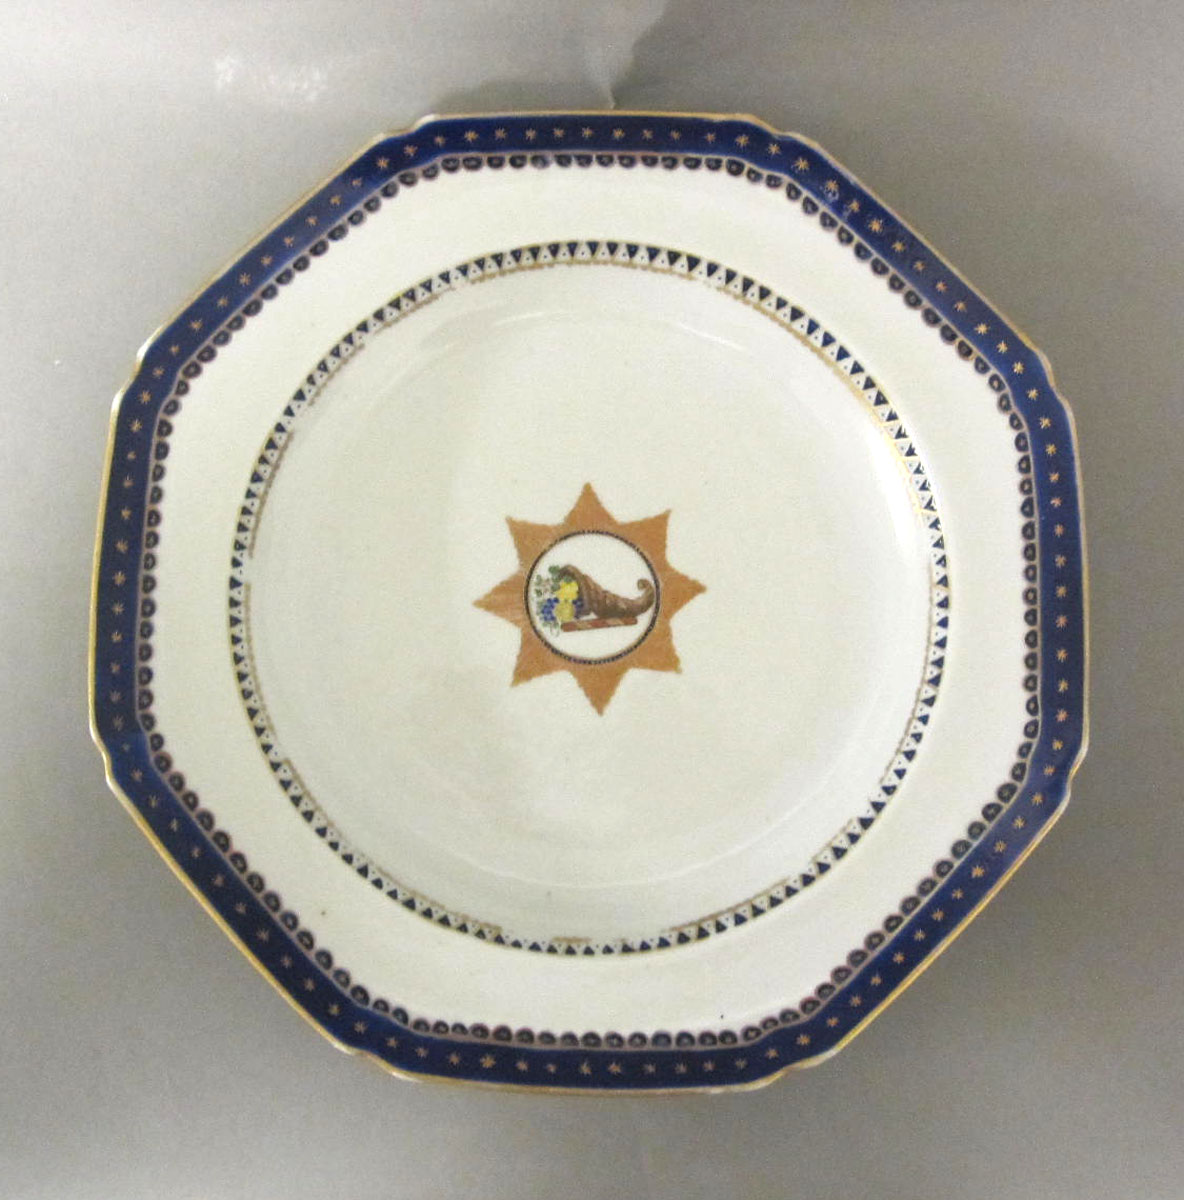 1965.0718.006 Porcelain plate